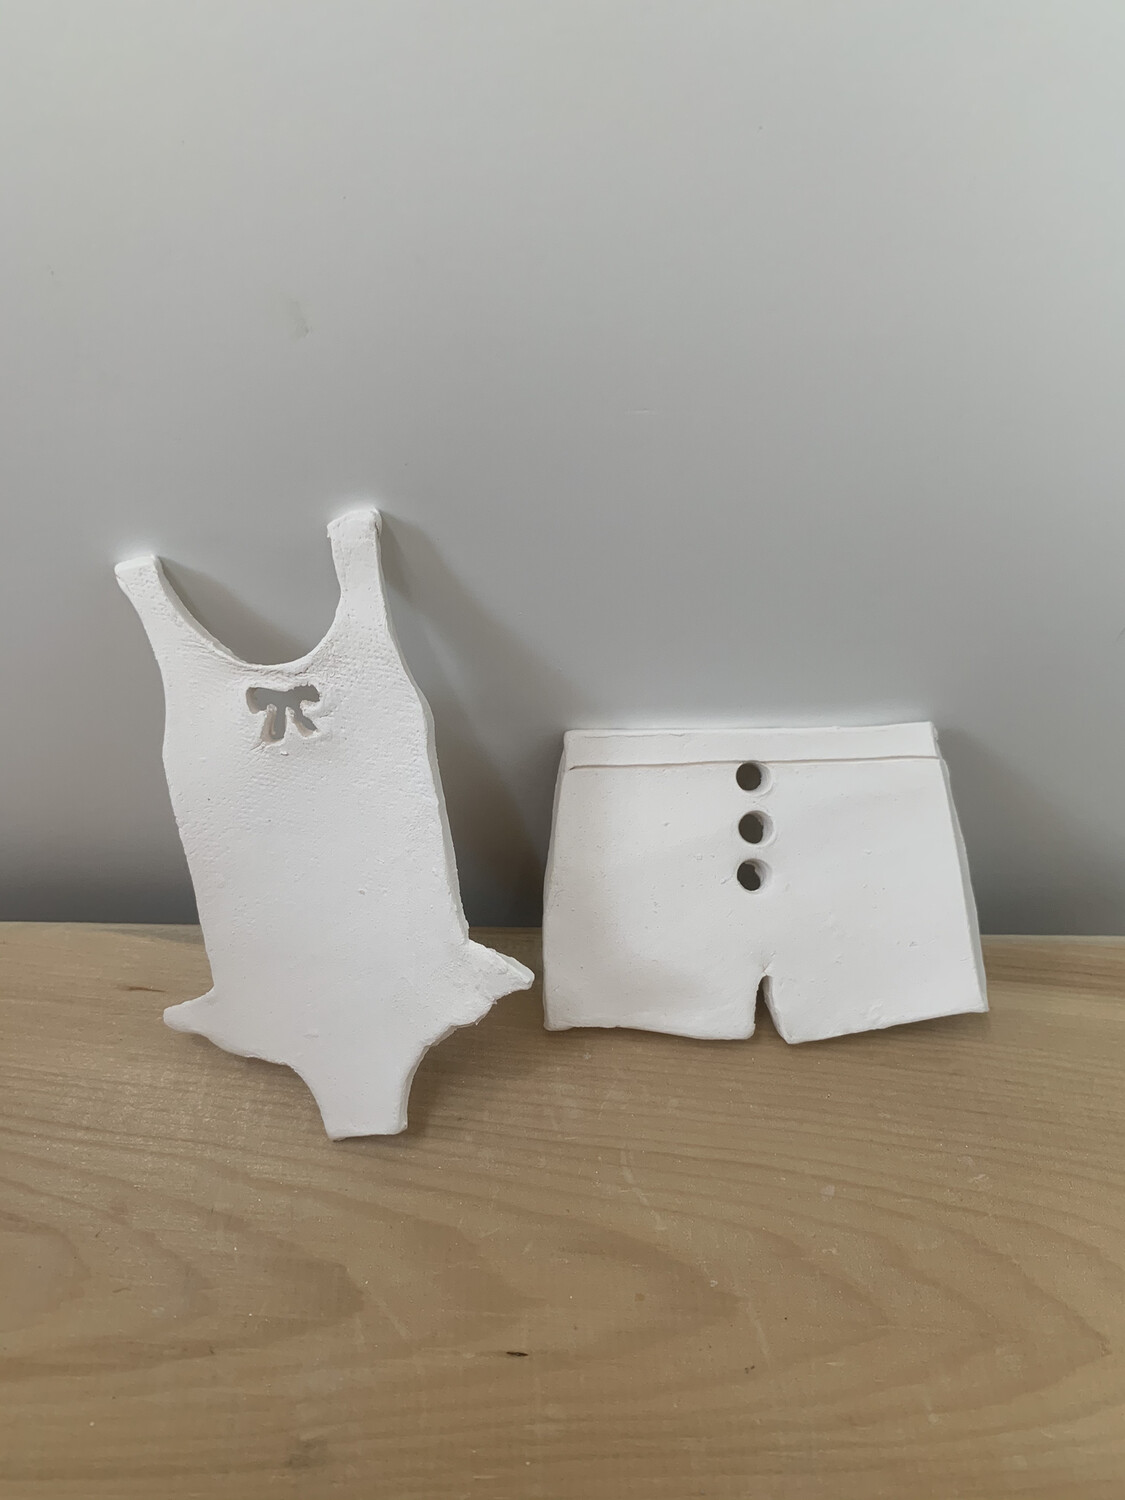 NO FIRE Paint Your Own Pottery Kit - 
Ceramic Set of 2 Beach Bathing Suit Christmas Ornaments - Acrylic Paint Kit